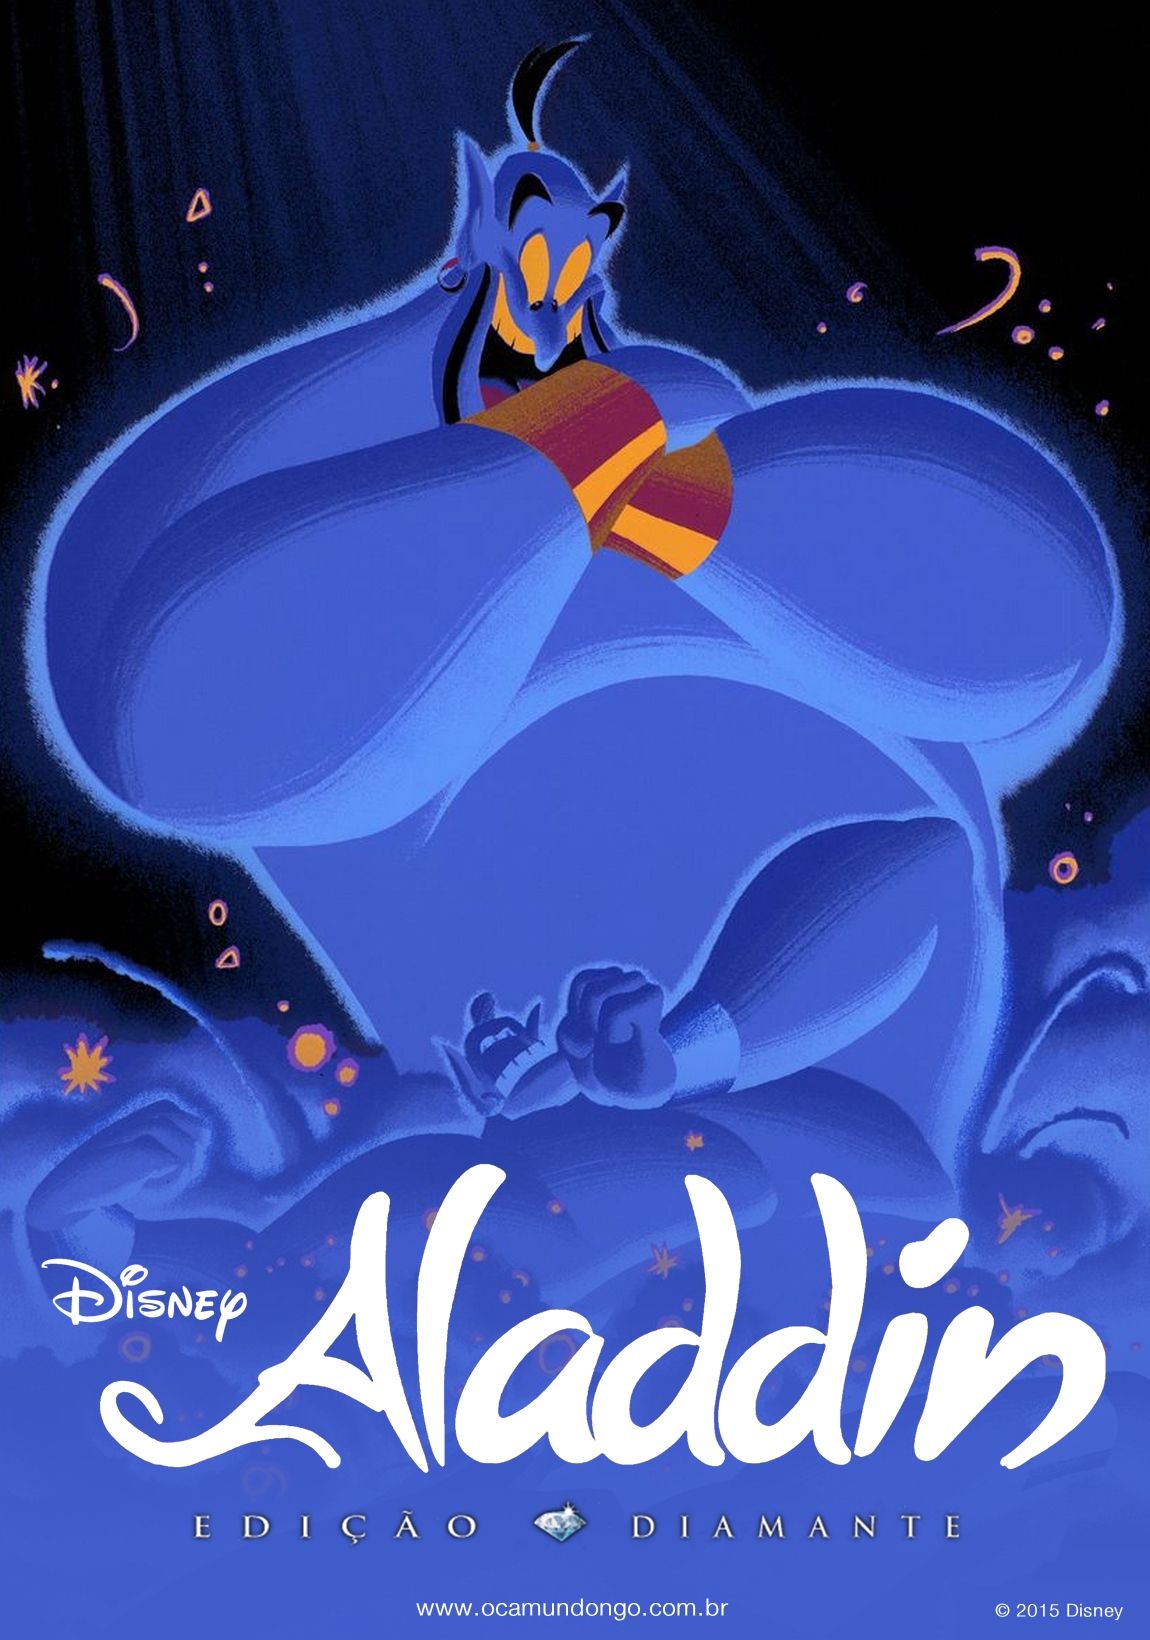 aladdin-poster-diamante-genio-camundongo